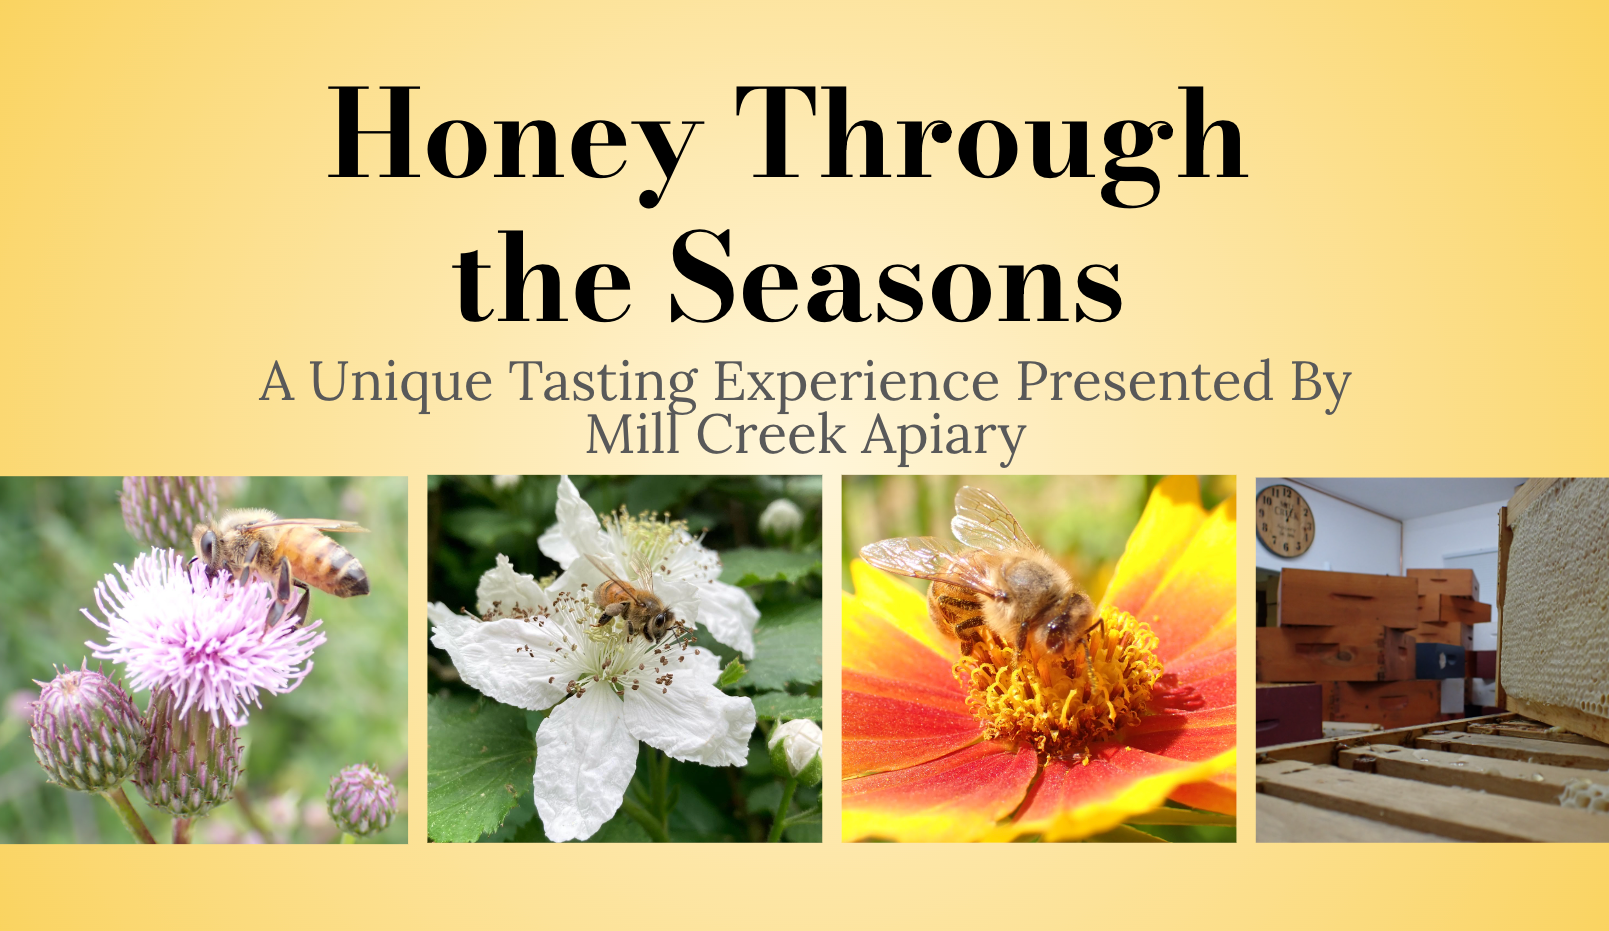 "Honey Through the Seasons- A Unique Honey Tasting Experience"